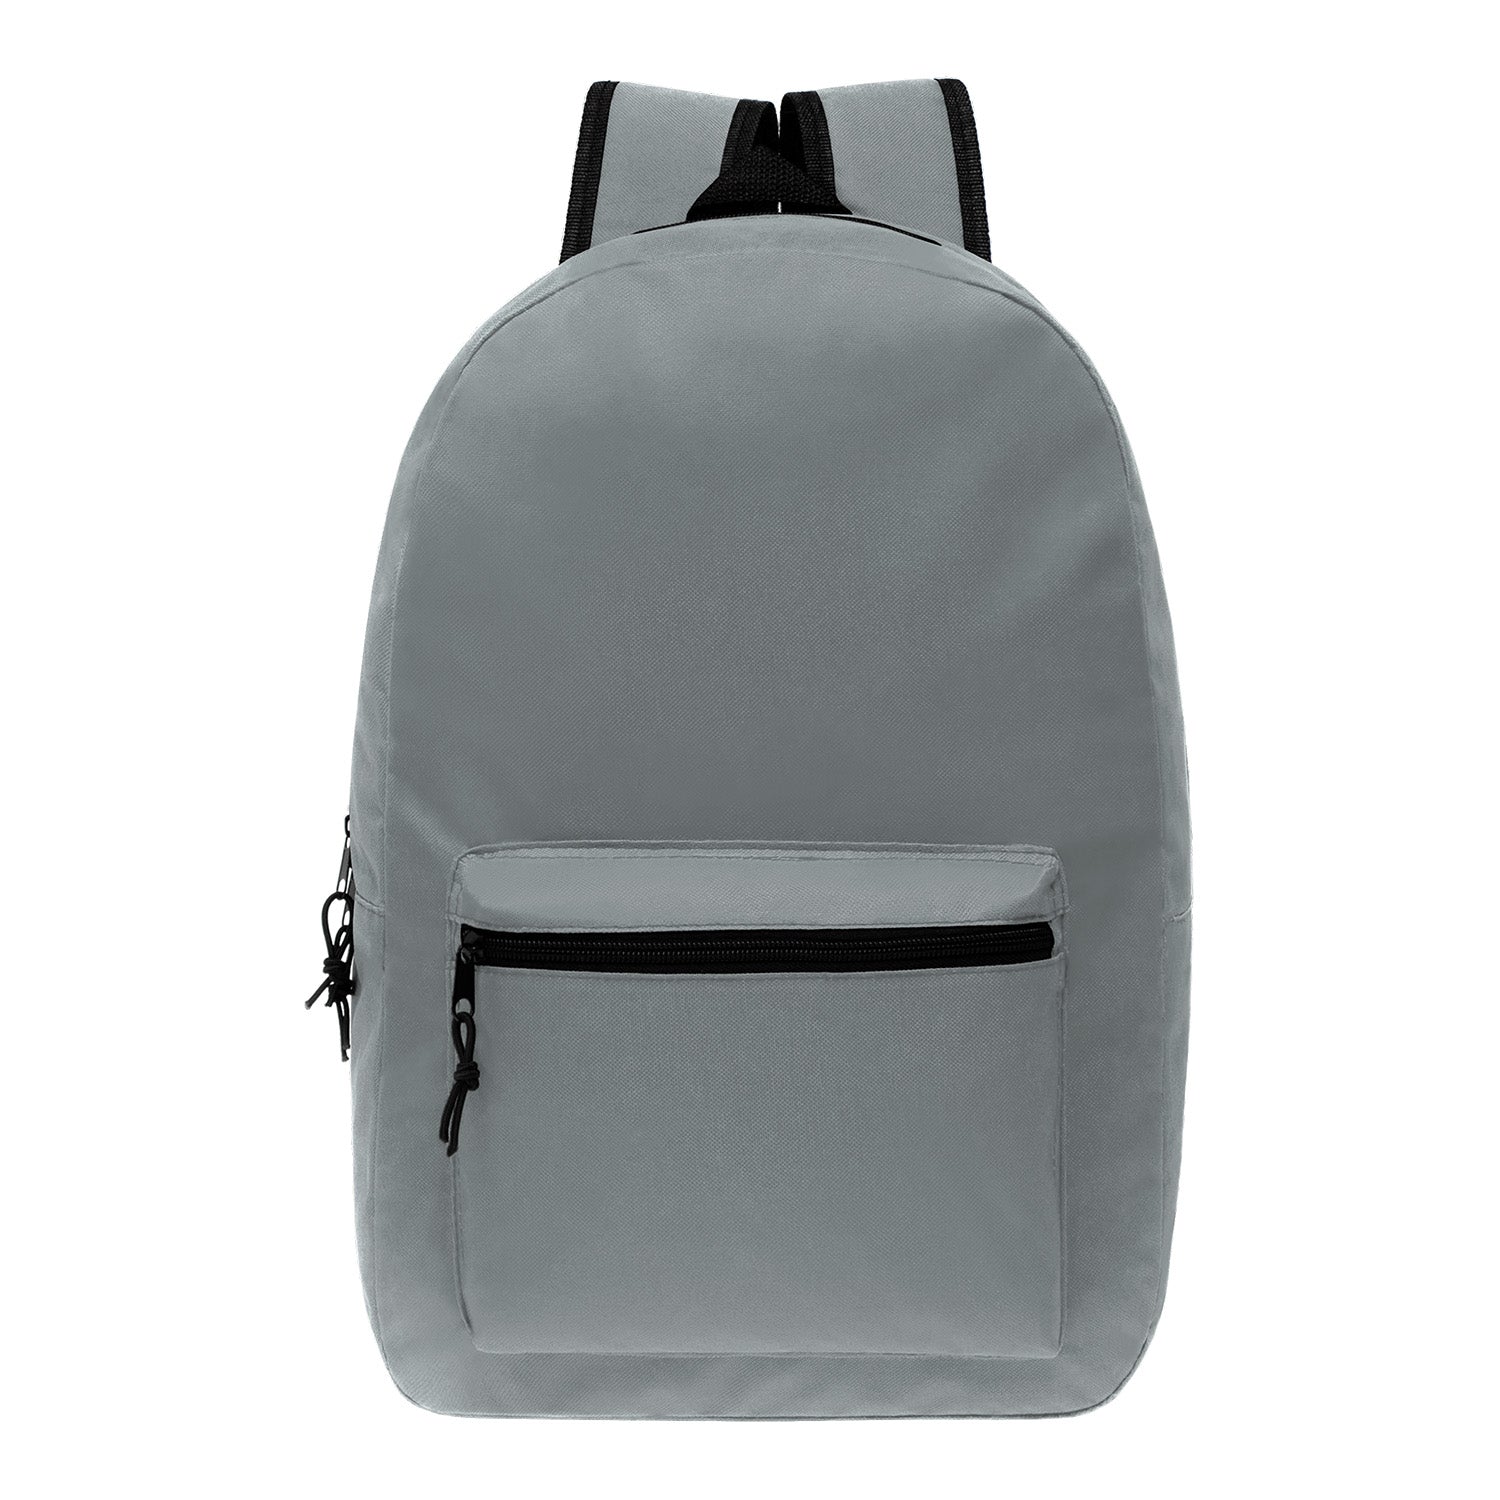 17 inch wholesale bulk backpack in gray for school